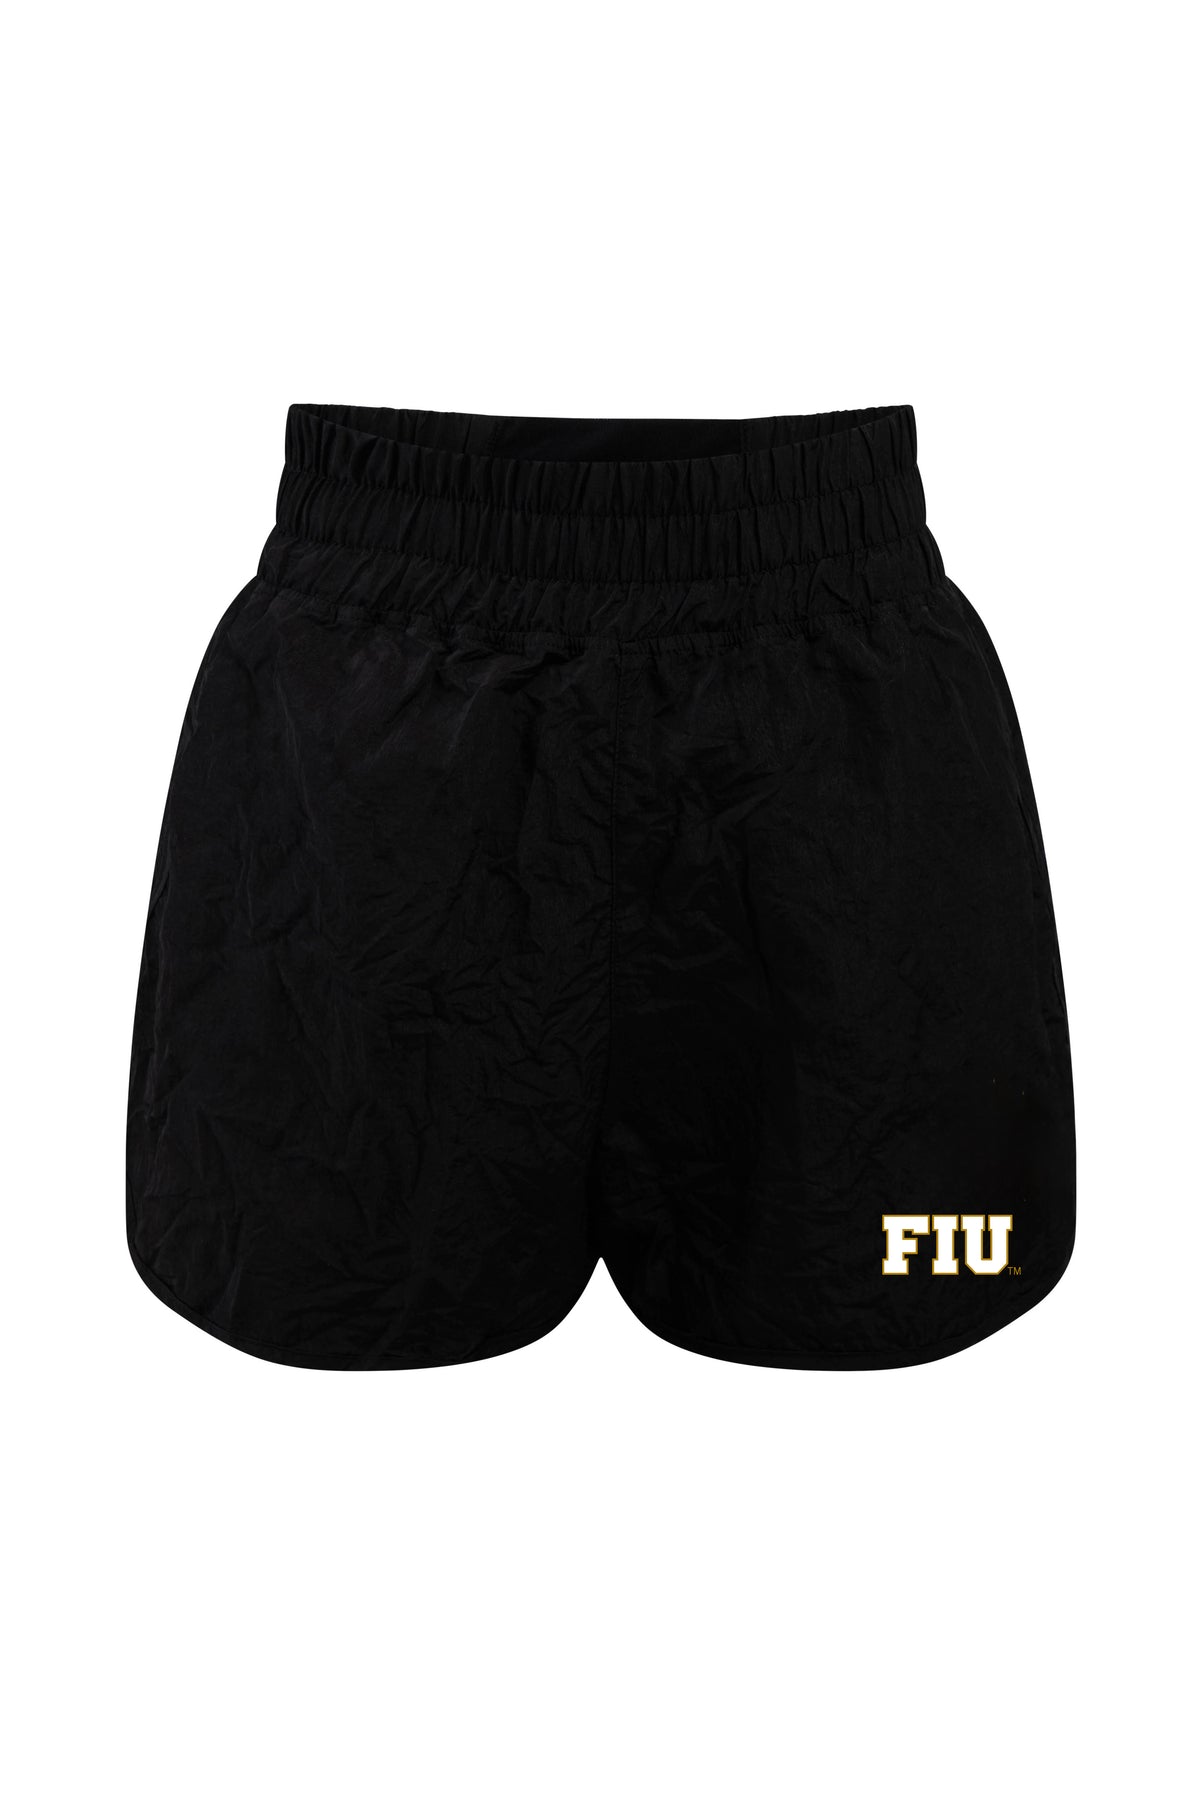 Florida International University Boxer Short